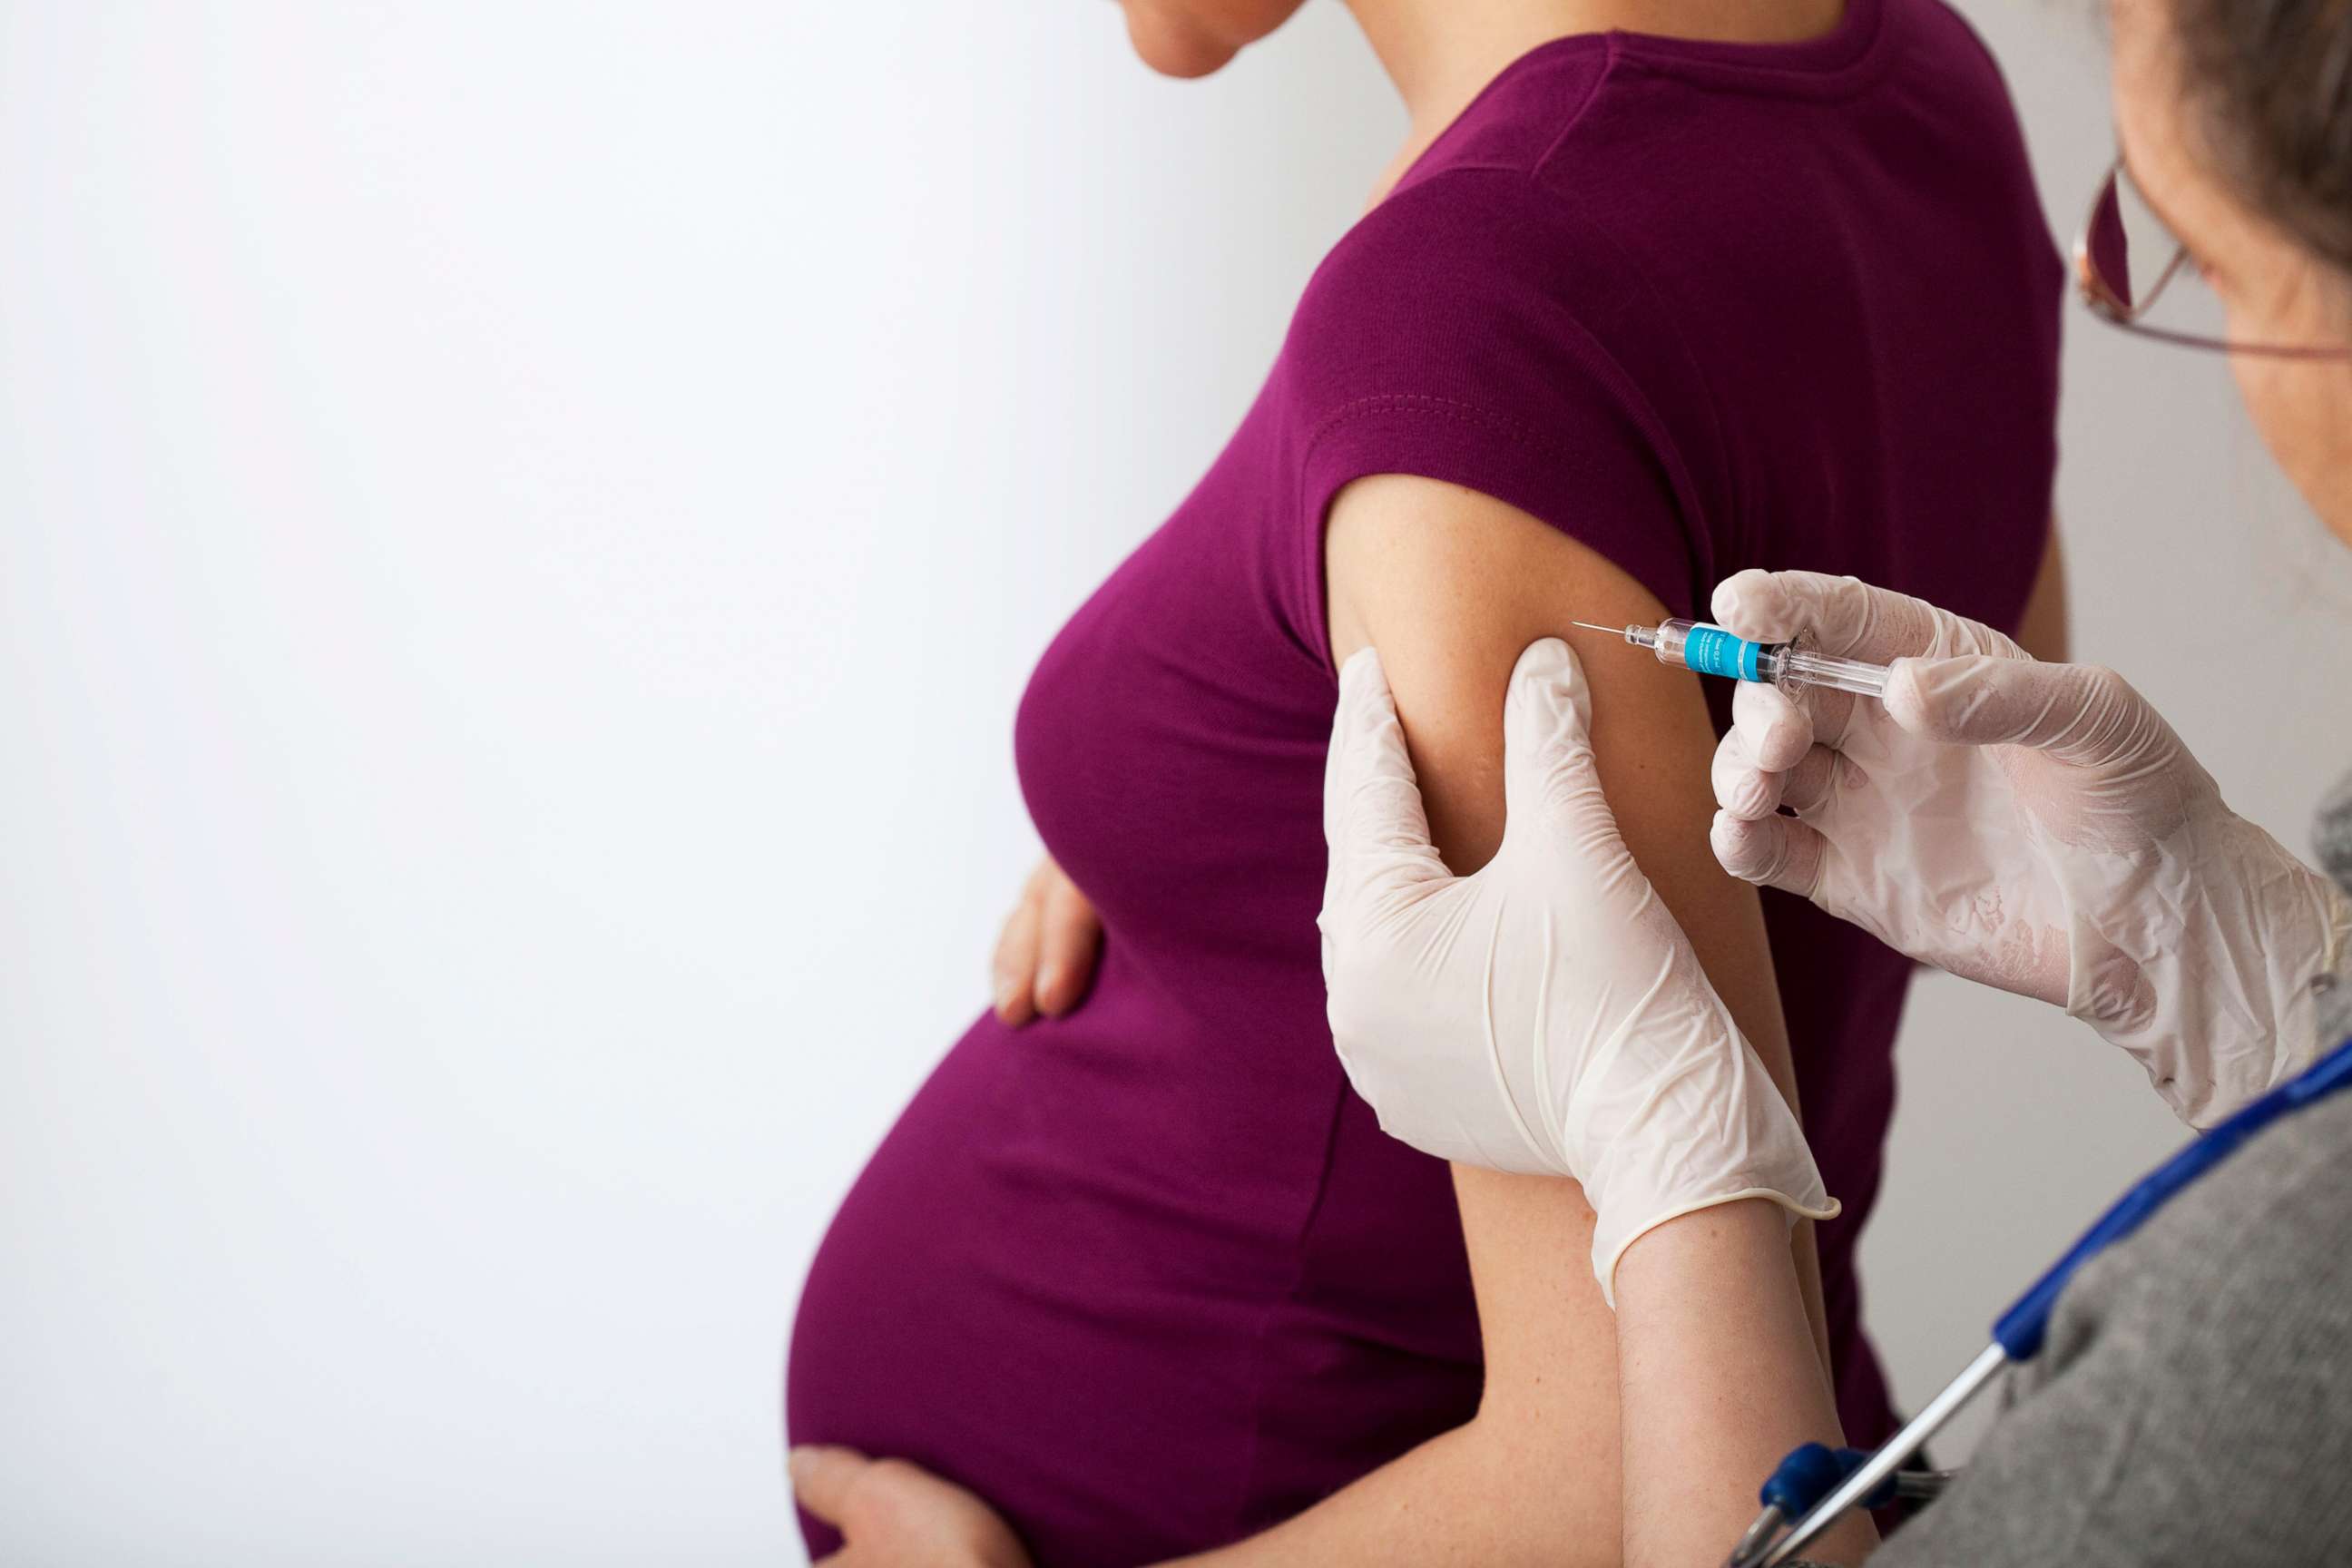 PHOTO: A pregnant woman receives a vaccine shot.